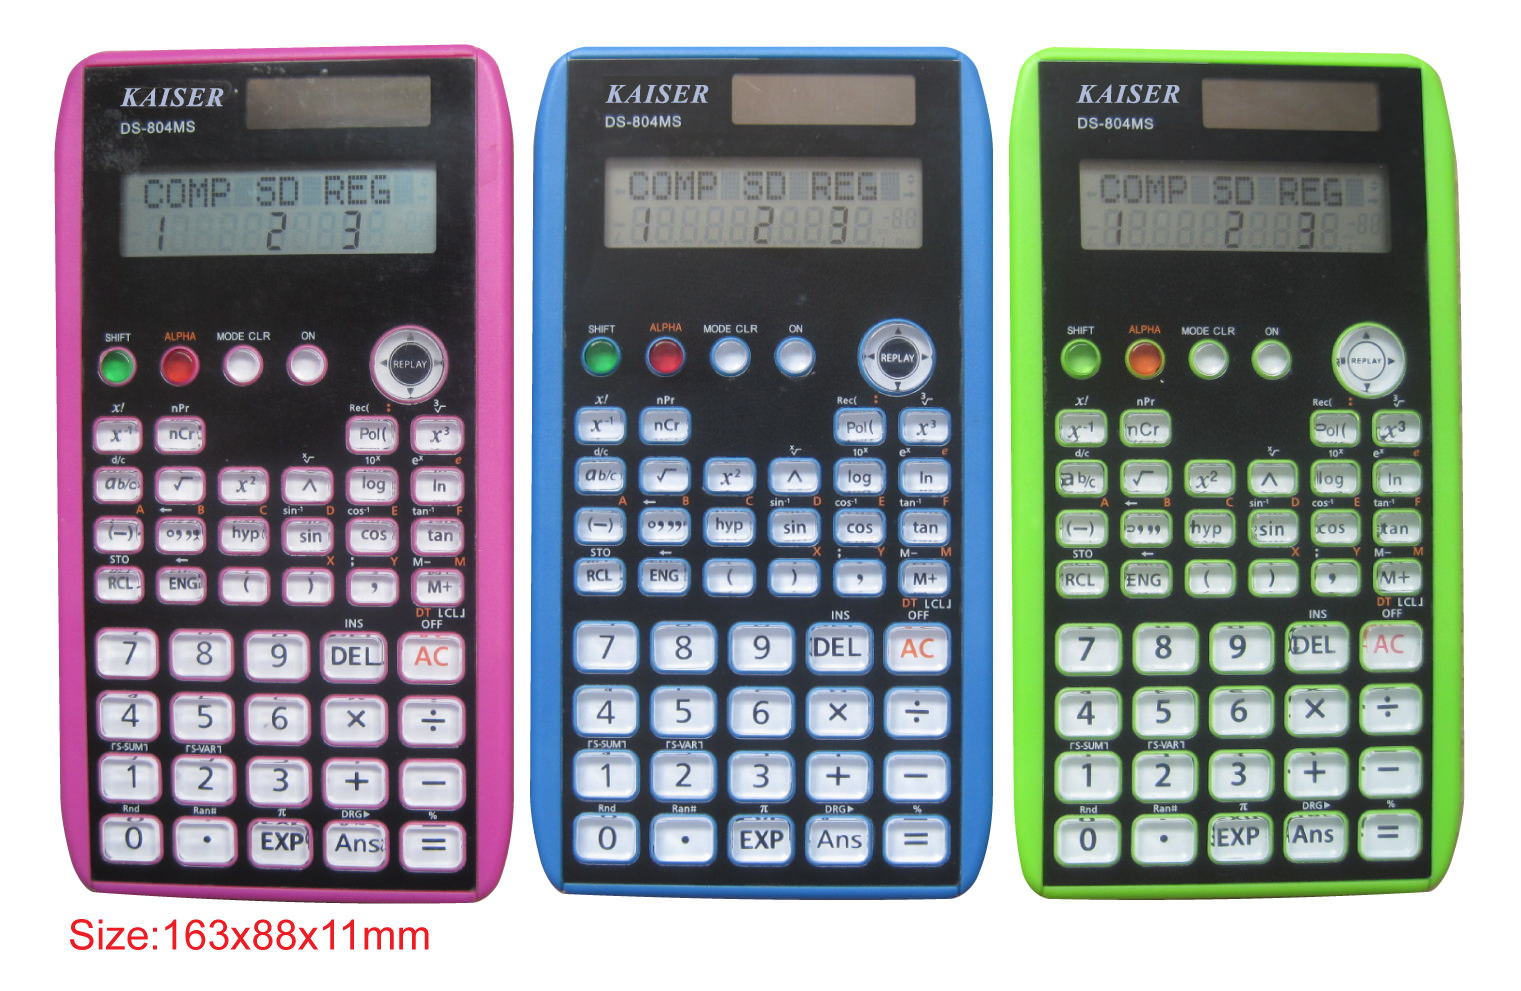  2-line 10+2 digit 224 functions scientific calculator